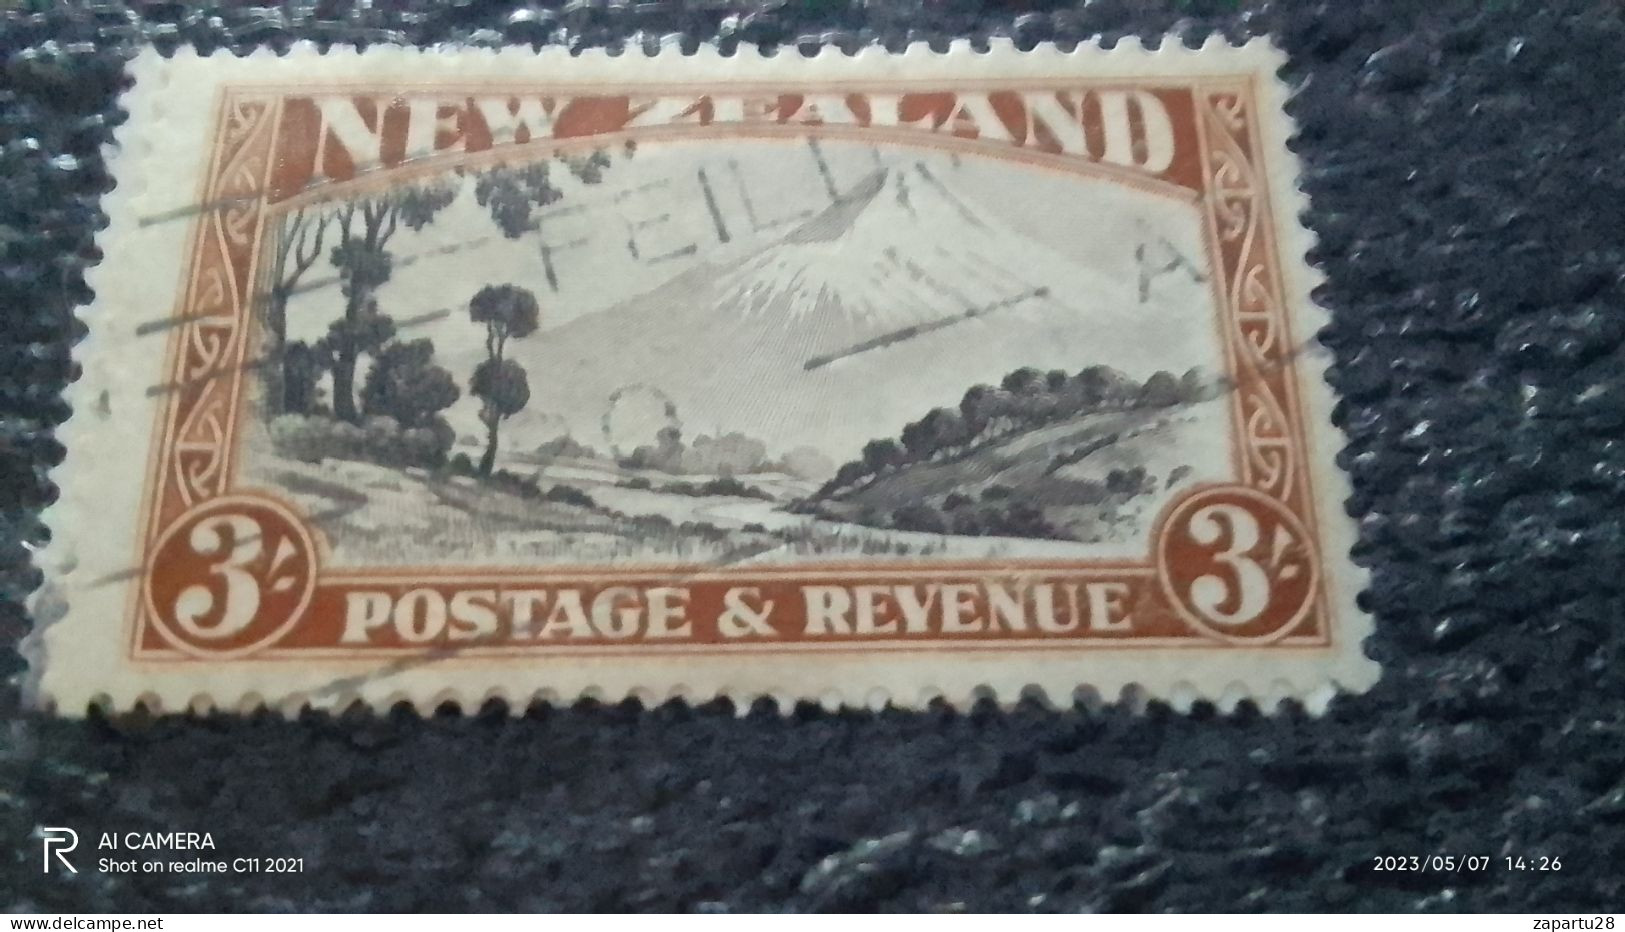 YENİ ZELANDA- 1930-40       3SH            USED - Used Stamps